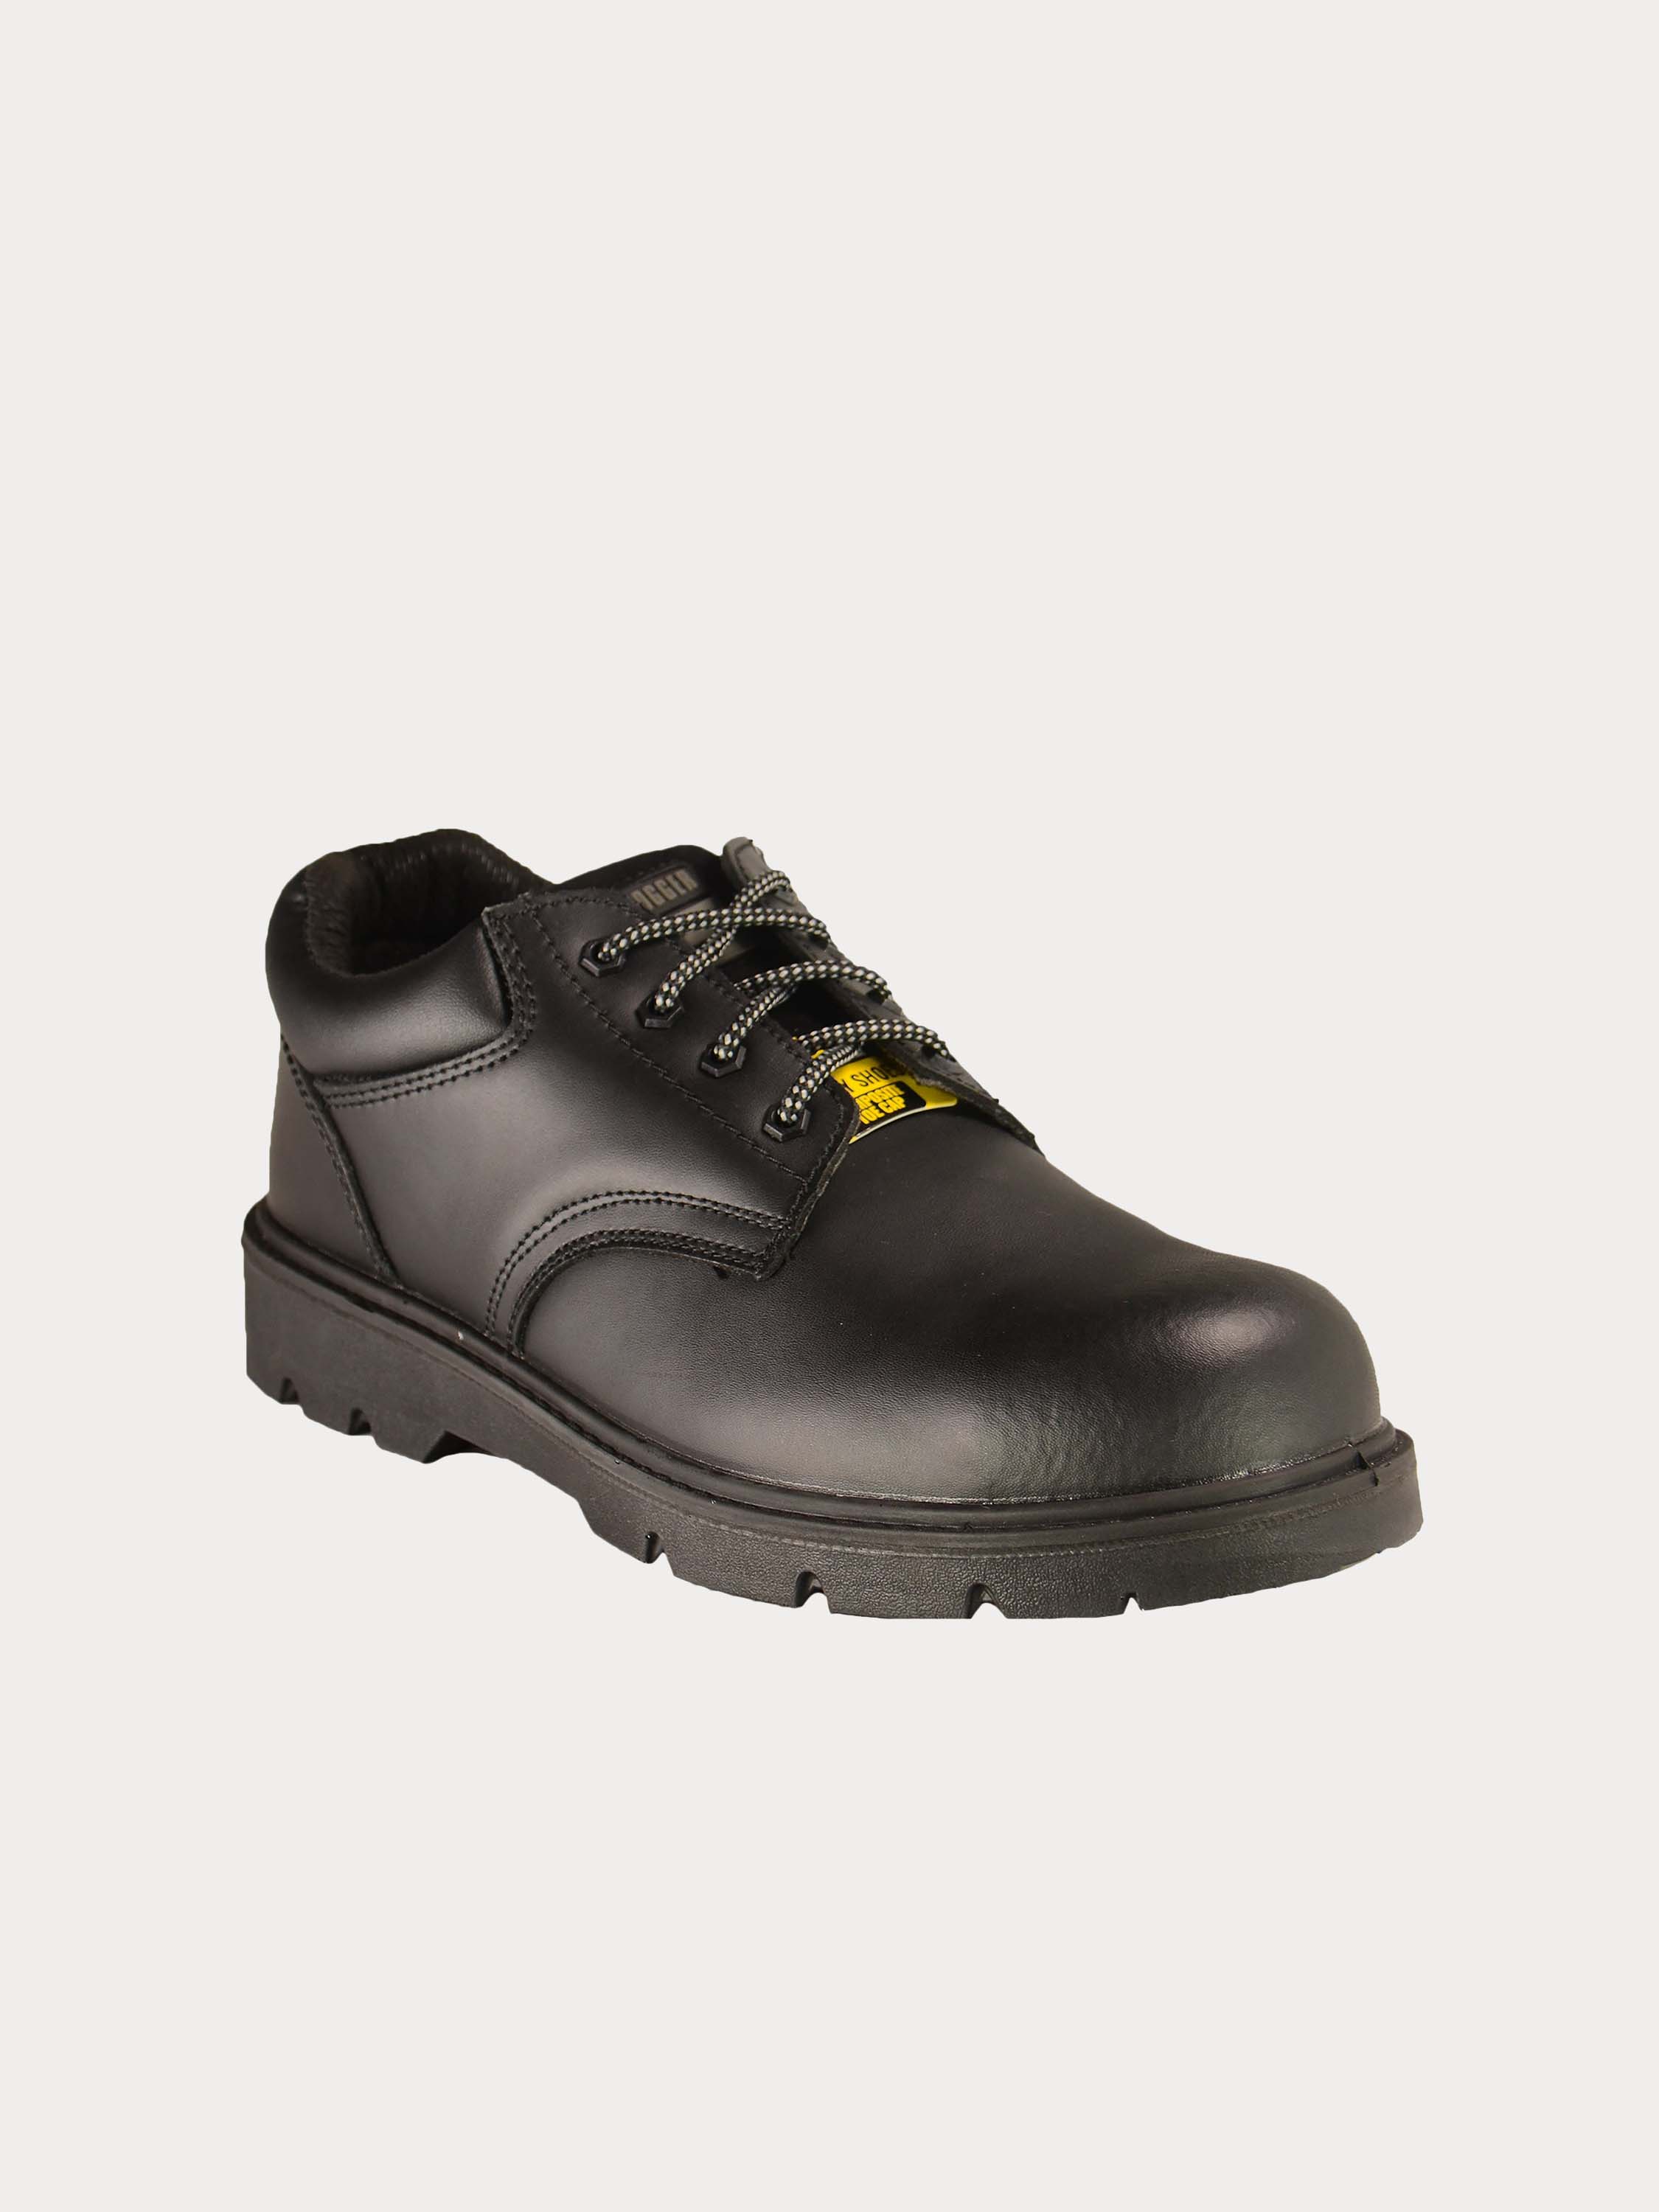 Safety Jogger X1110 S3 SRC Safety Shoes #color_Black